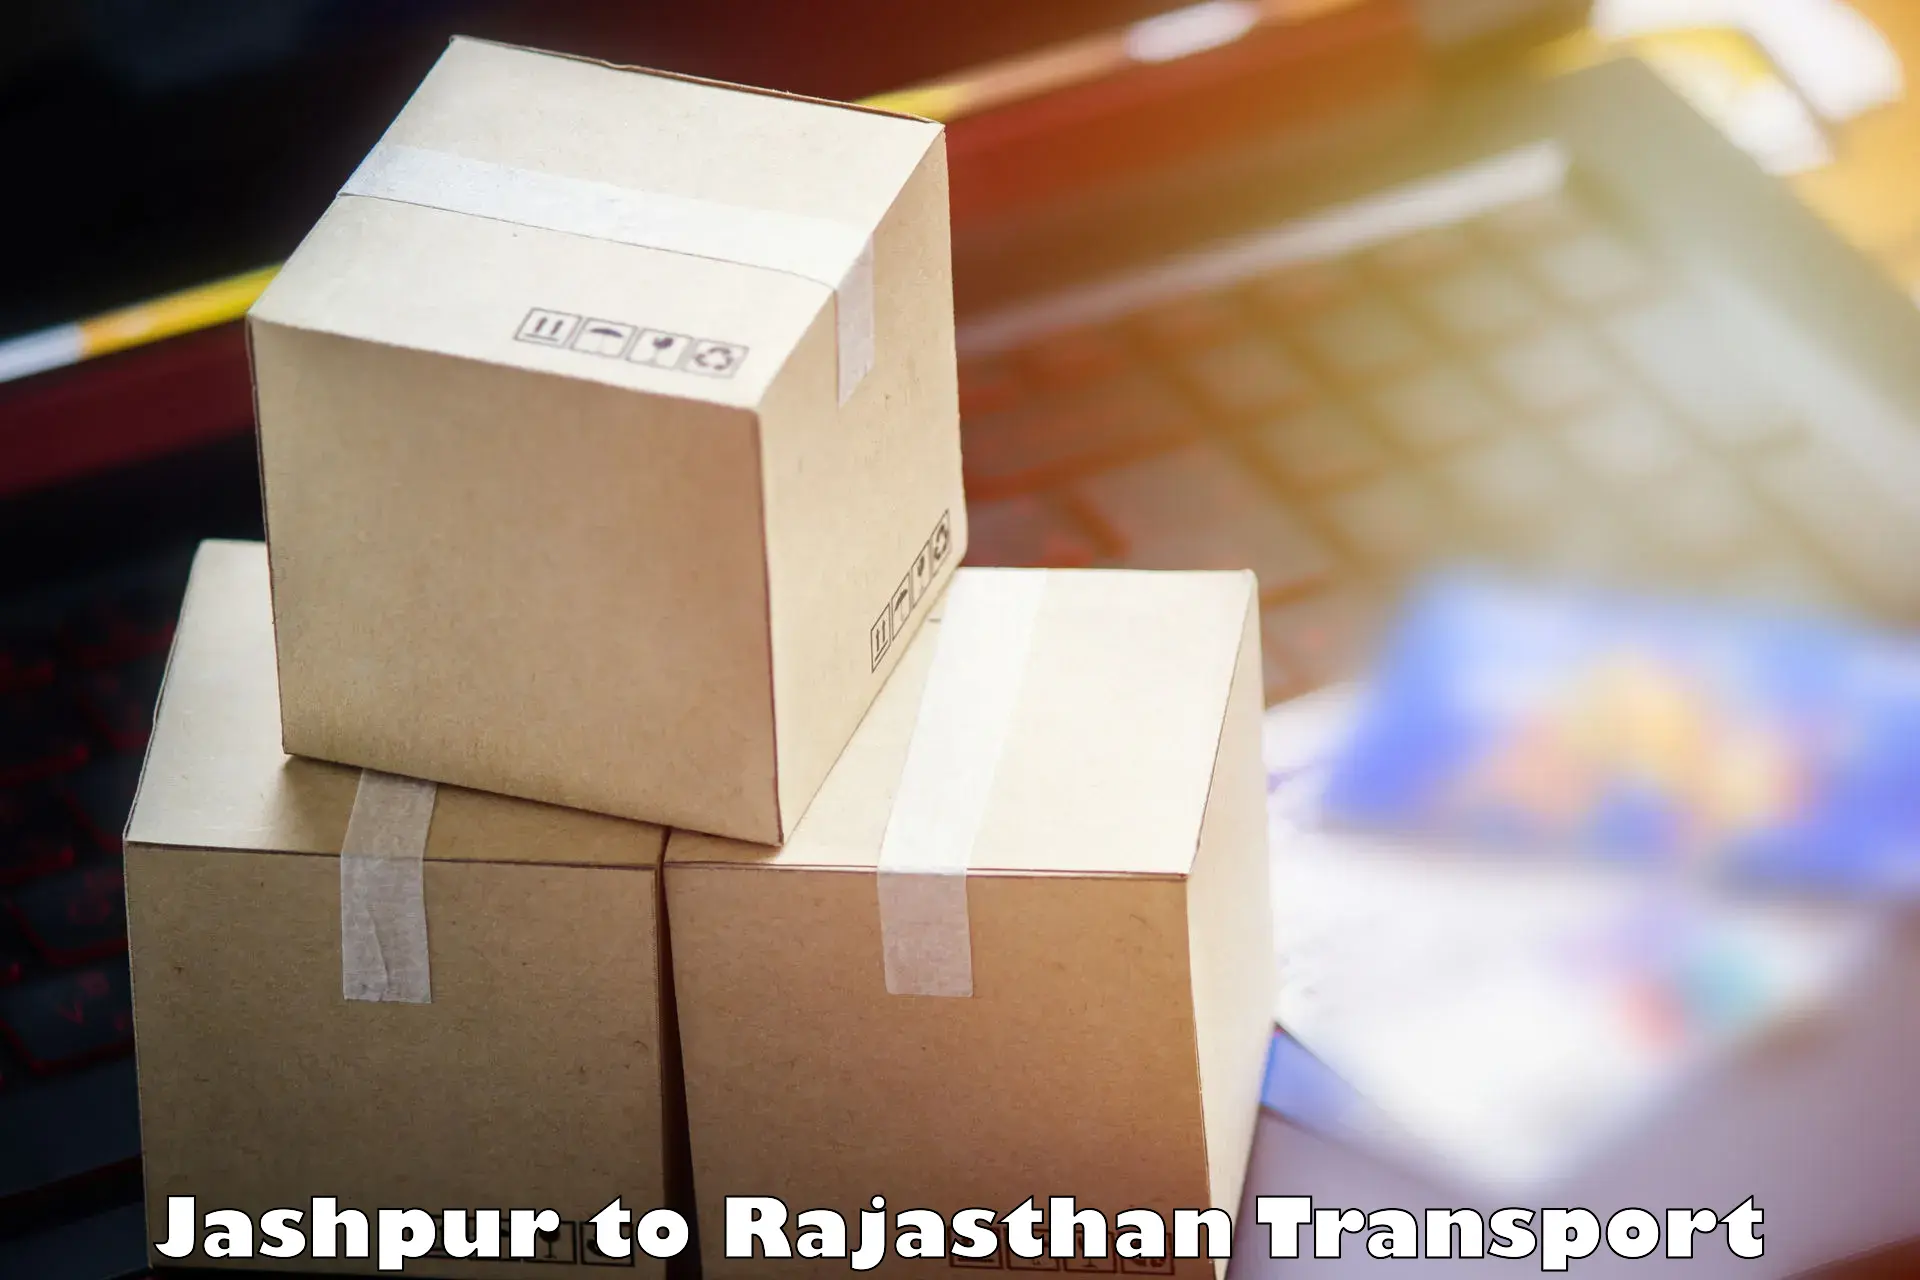 Commercial transport service Jashpur to Jaipur